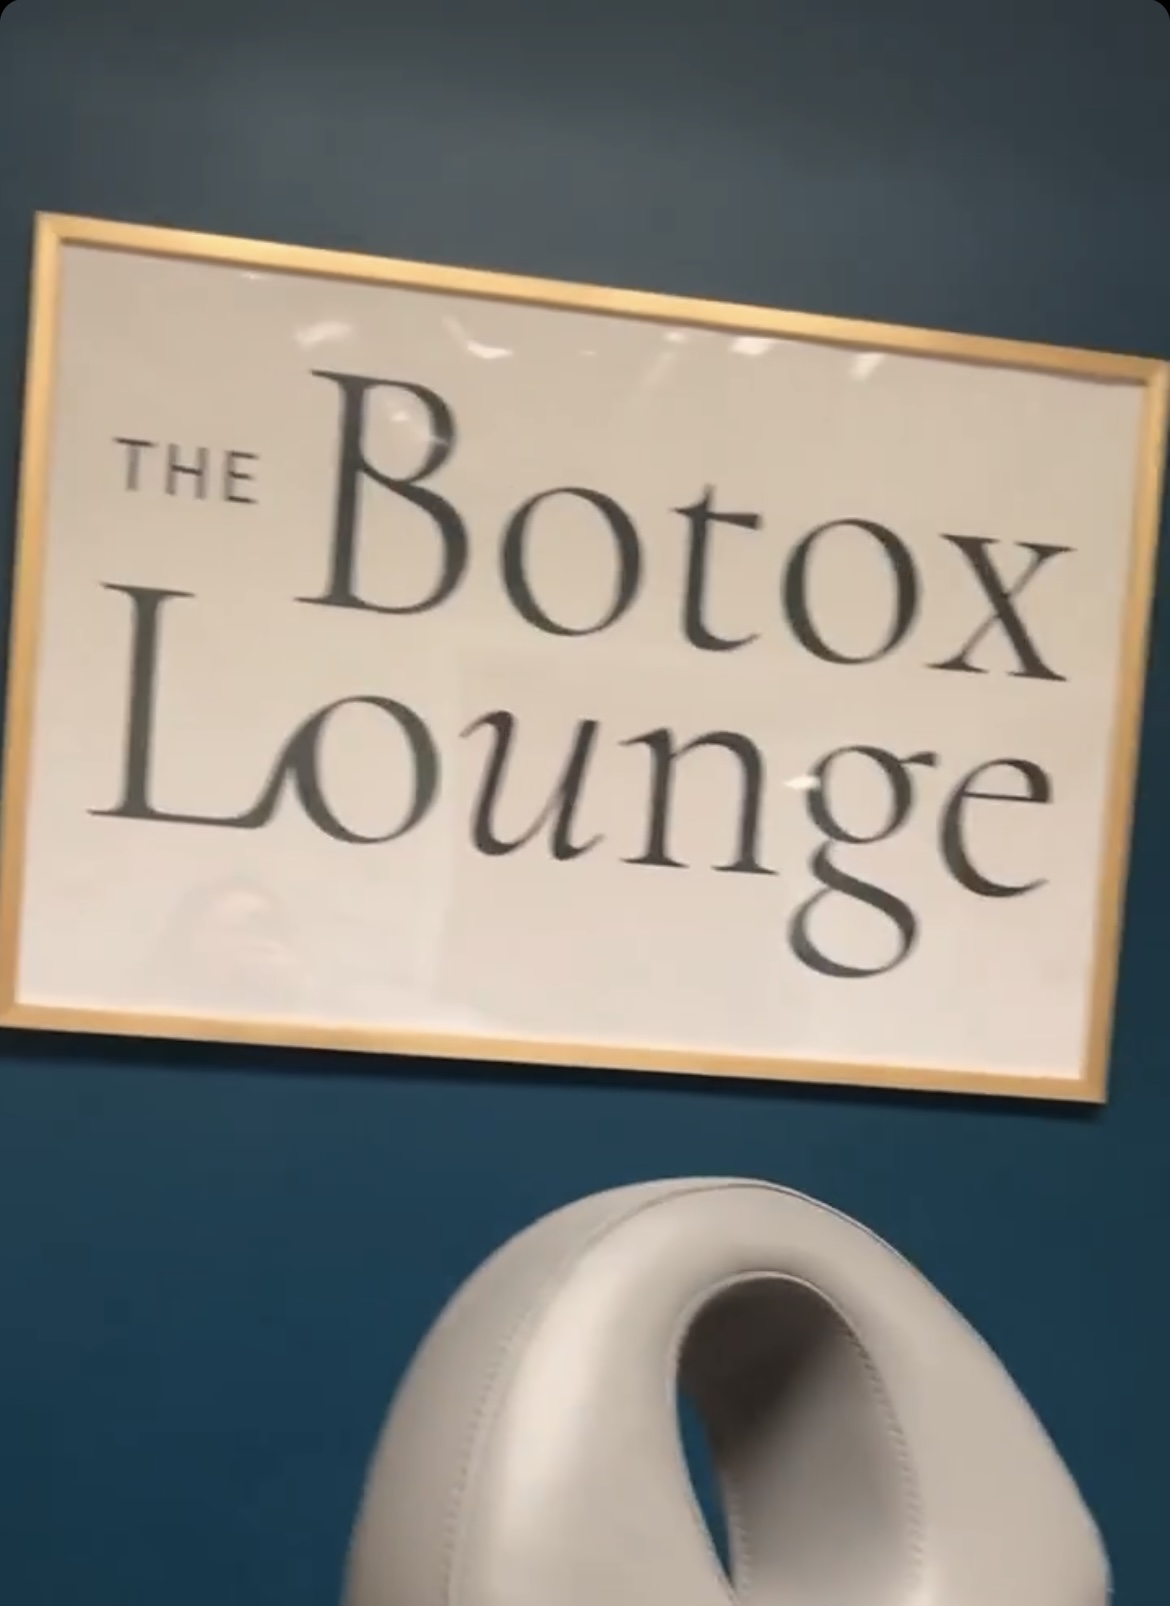 The Botox Lounge 162 Cordaville Rd #145, Southborough Massachusetts 01772